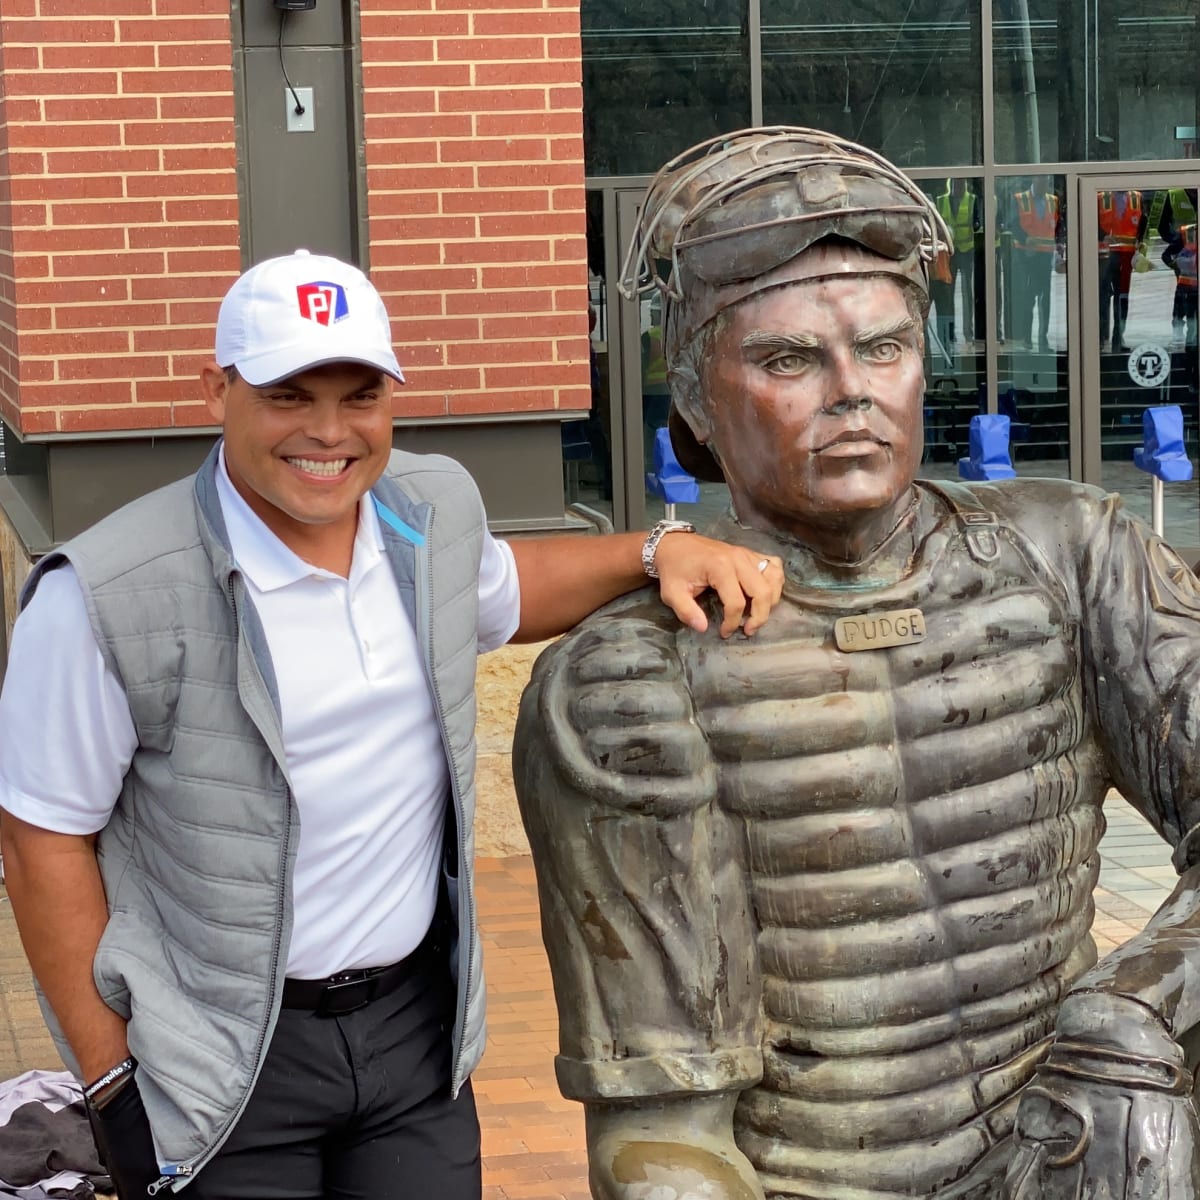 Rangers icon Iván 'Pudge' Rodríguez recognized for impact on Puerto Rico  through baseball